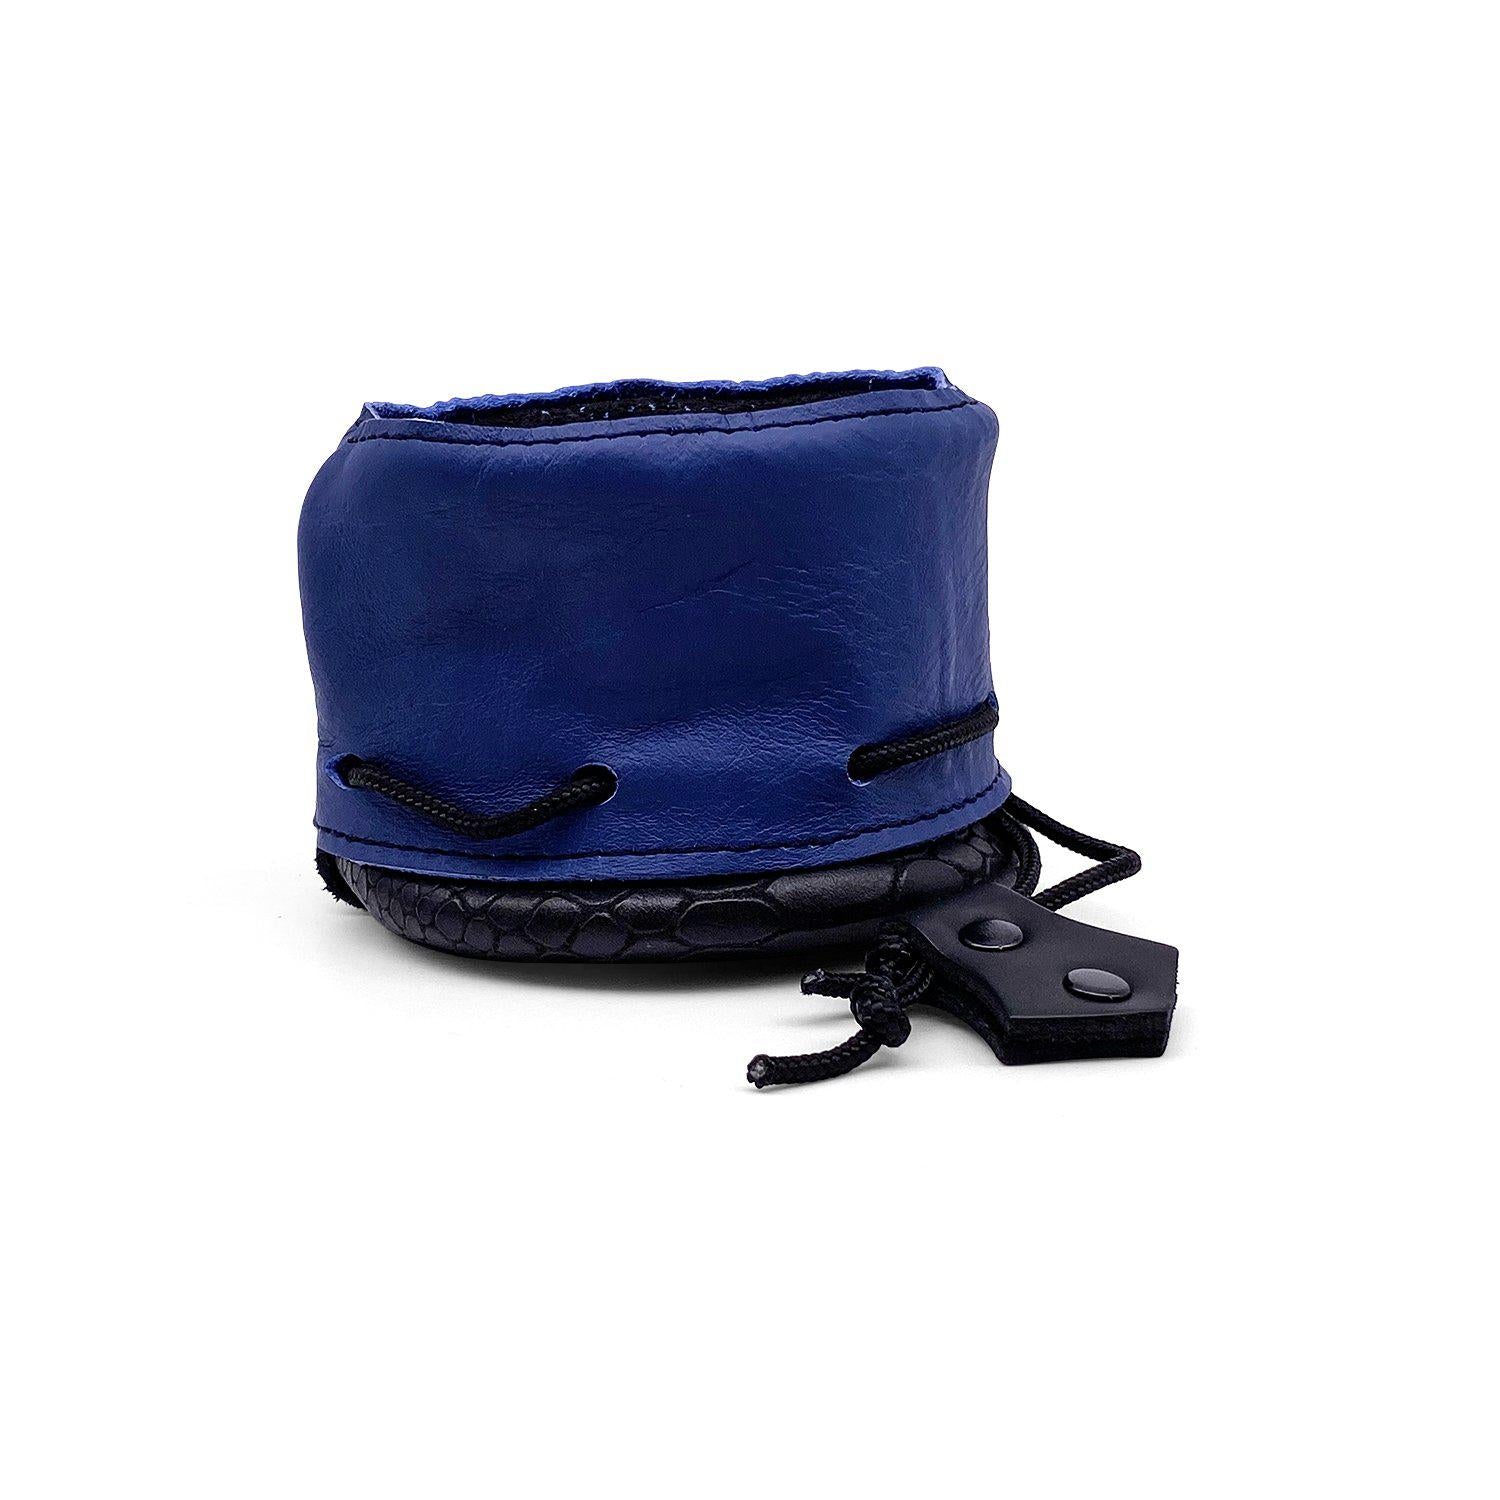 Black / Blue Cobra Scale Leather Dice Bag / Dice Cup Transformer